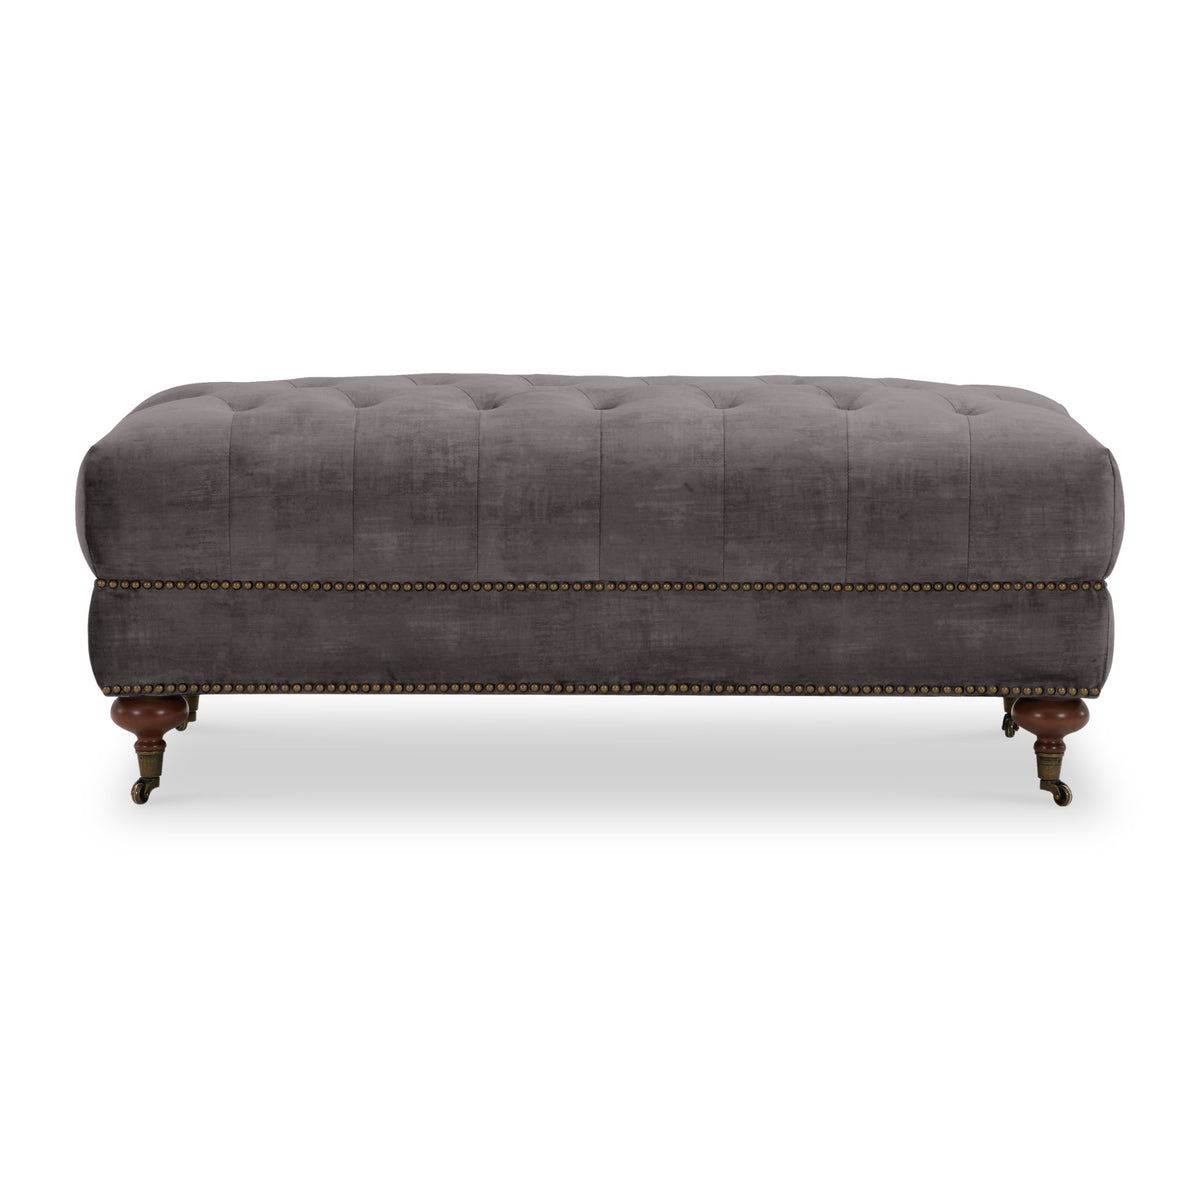 Stanhope Steel Grey Velvet Footstool from Roseland Furniture